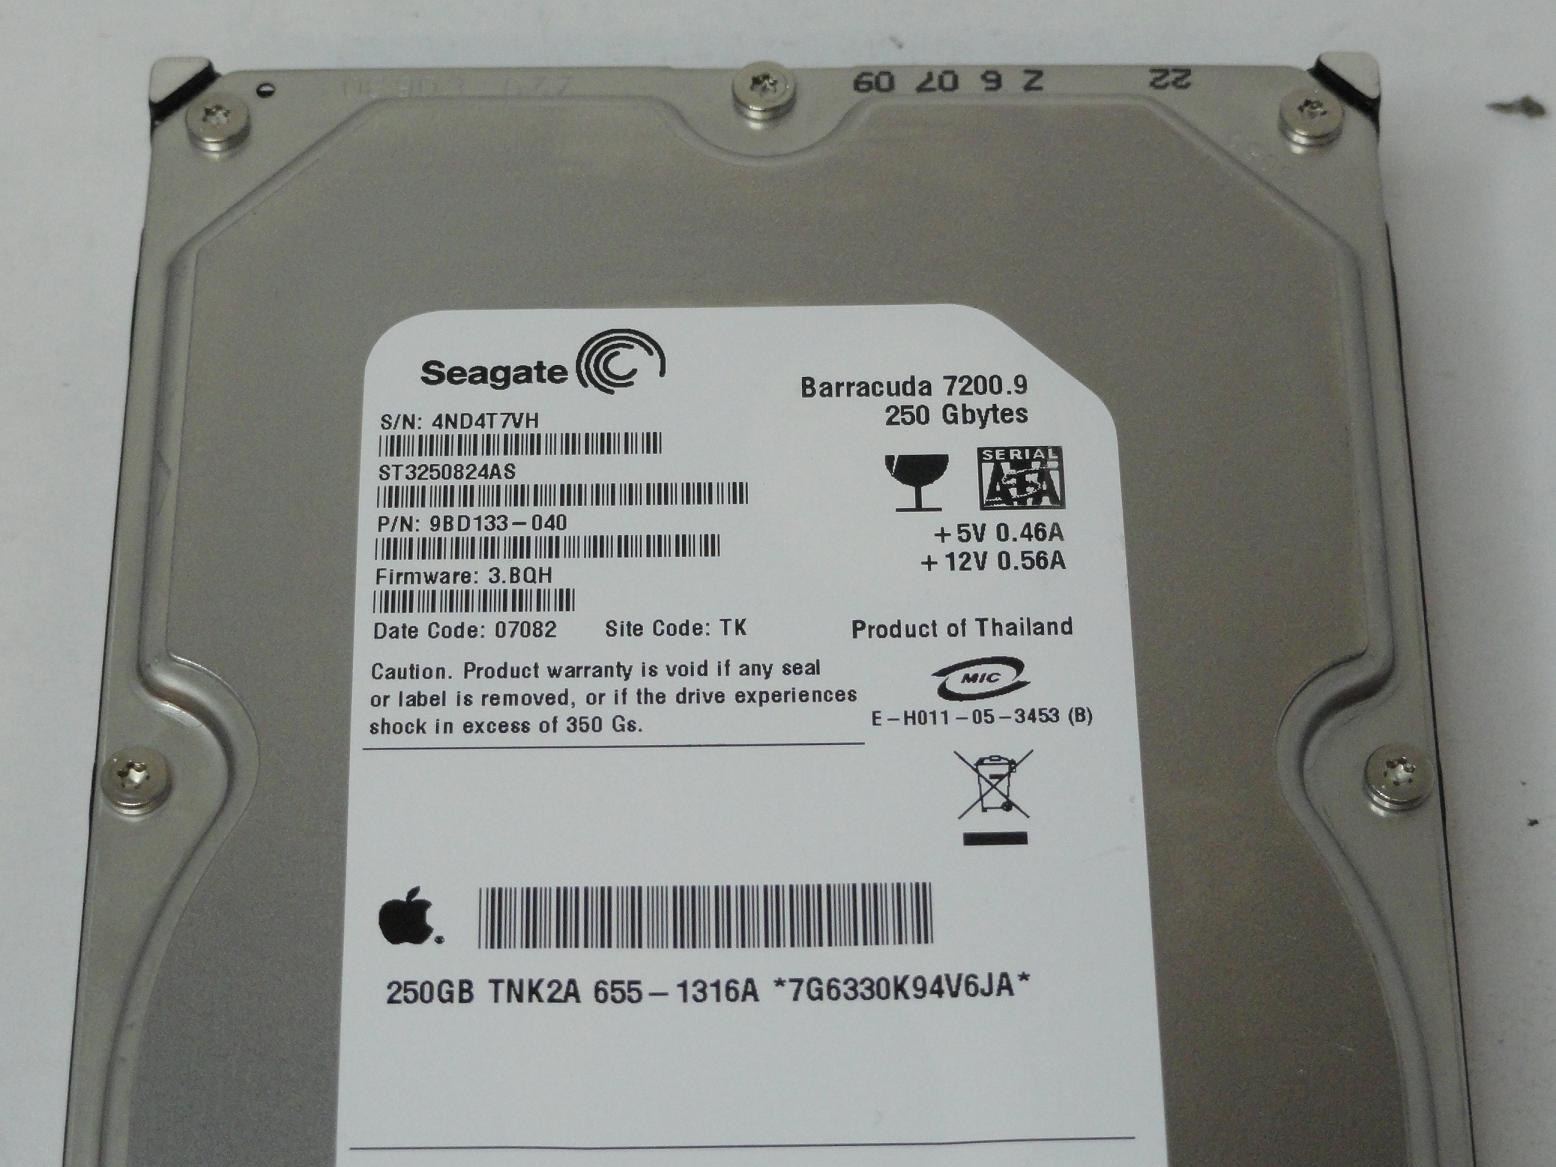 Seagate Apple 250GB SATA 7200rpm 3.5in HDD ( 9BD133-040 ST3250824AS 655-1316A ) ASIS